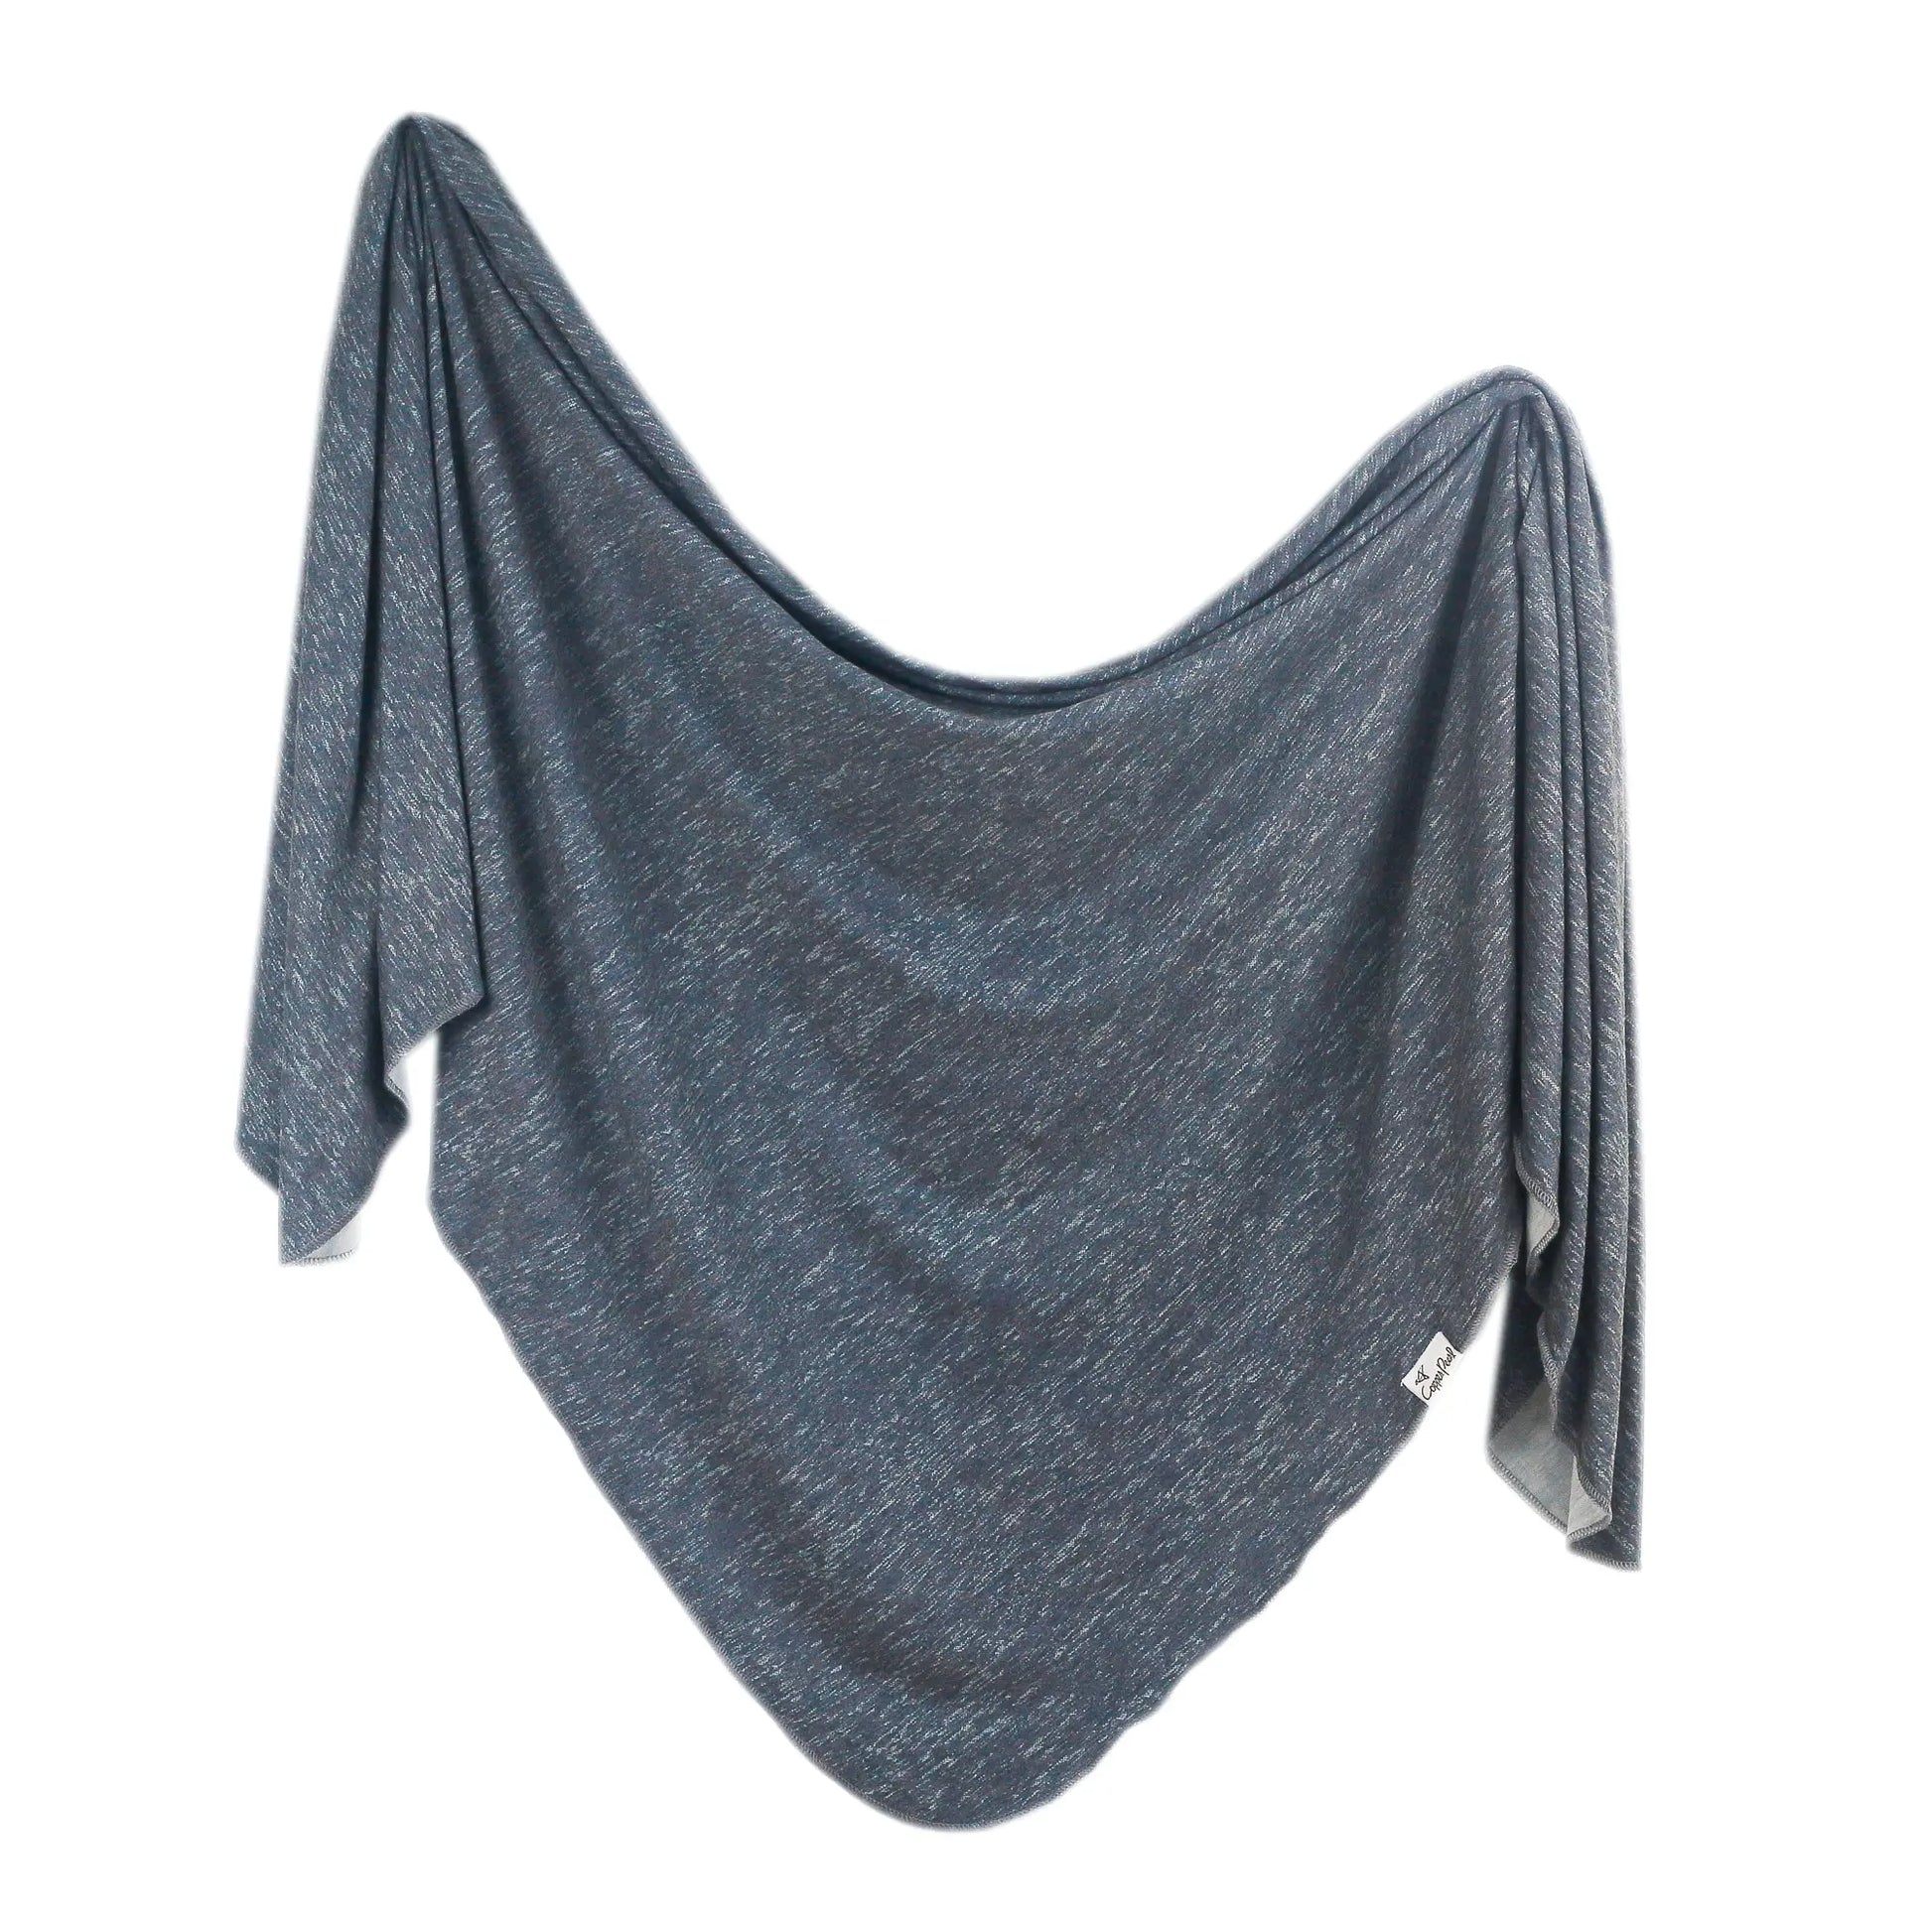 Copper pearl knit swaddle blanket